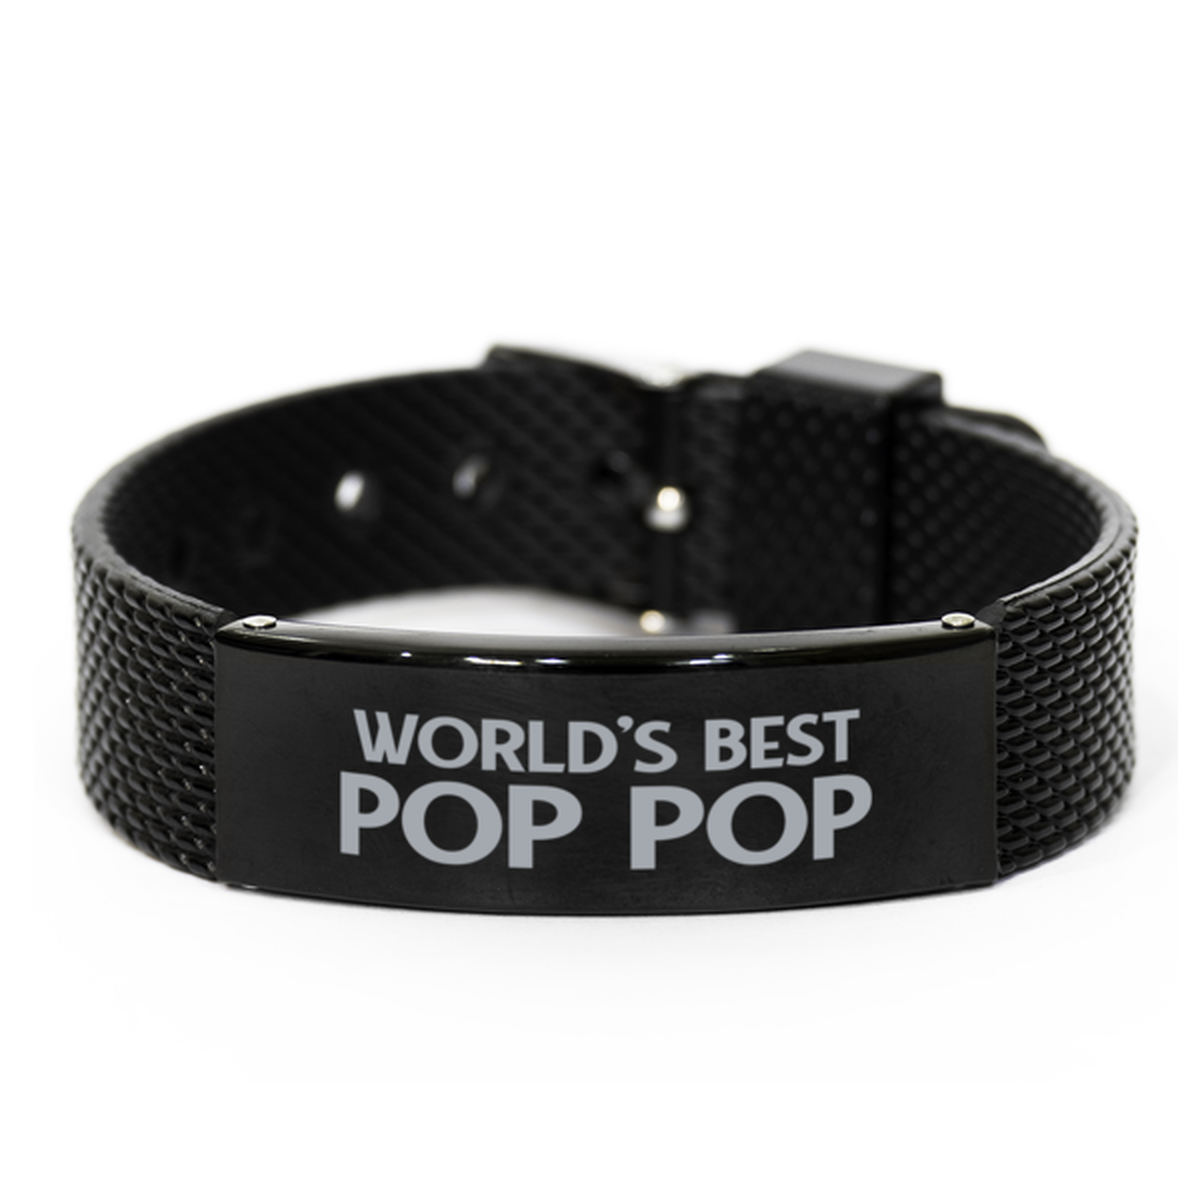 World's Best Pop Pop Gifts, Gag Engraved Bracelet For Pop Pop, Best Family Gifts For Men